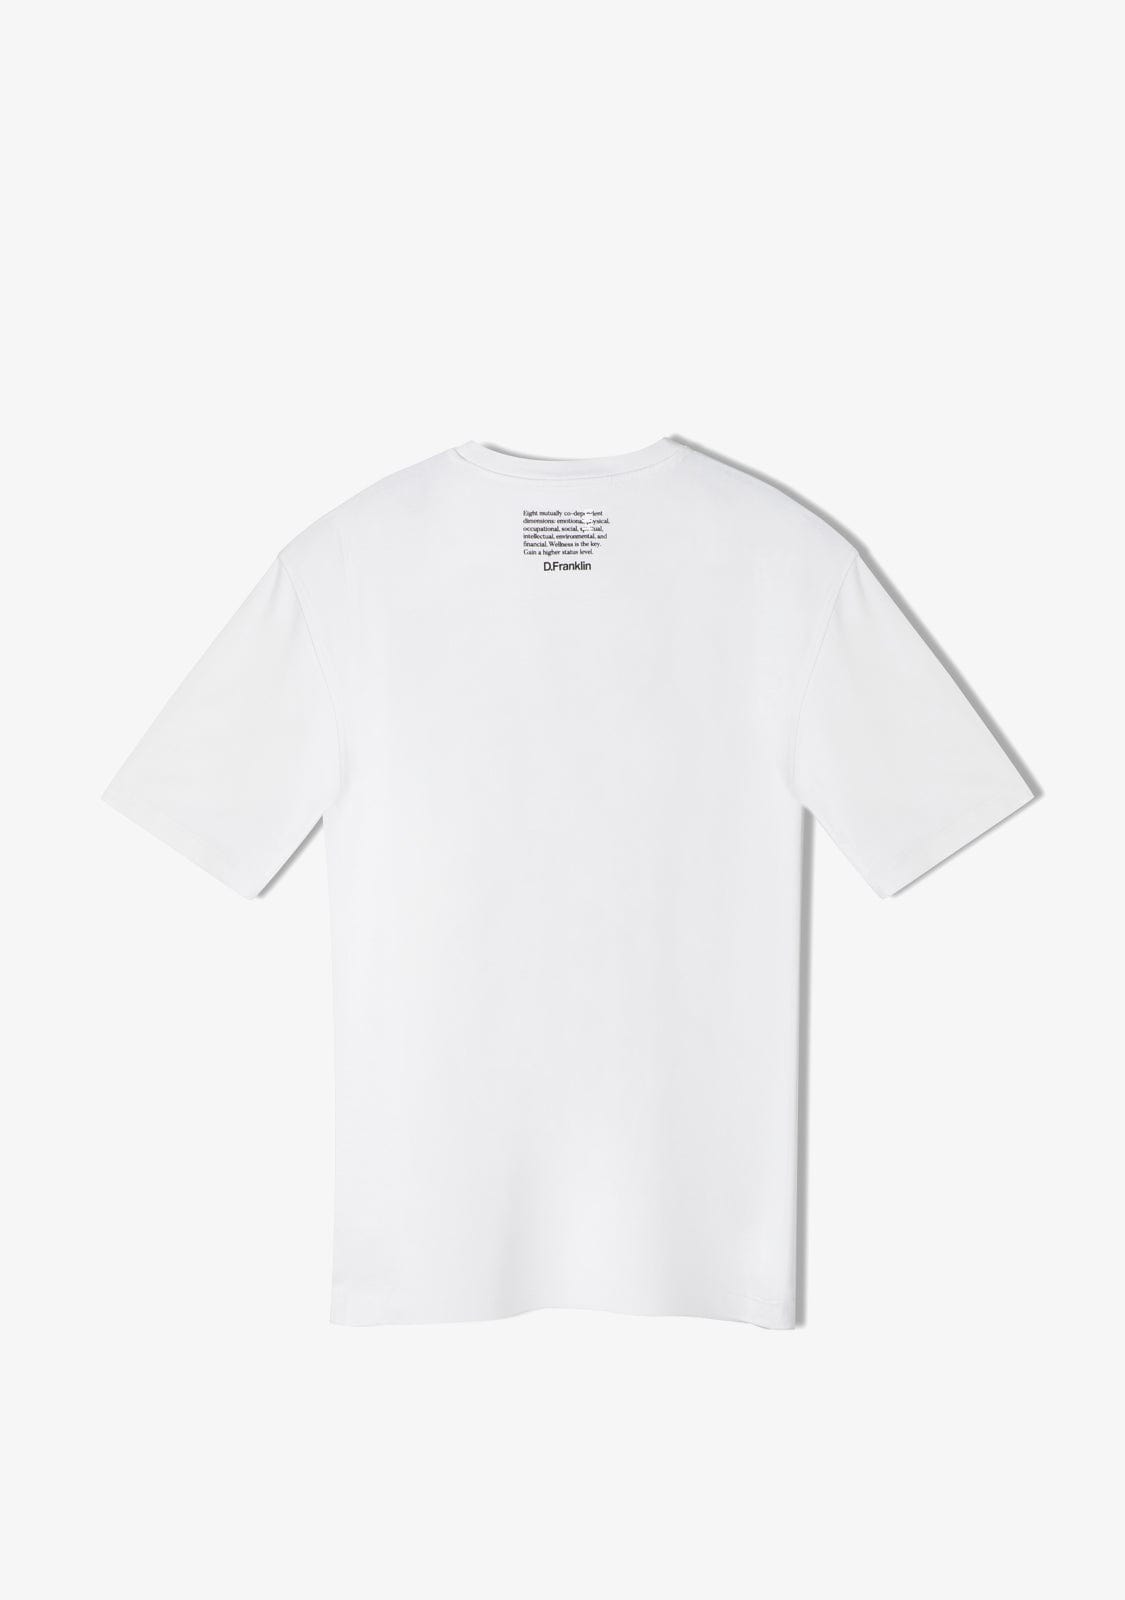 St. Denis Village T-Shirt White / Black